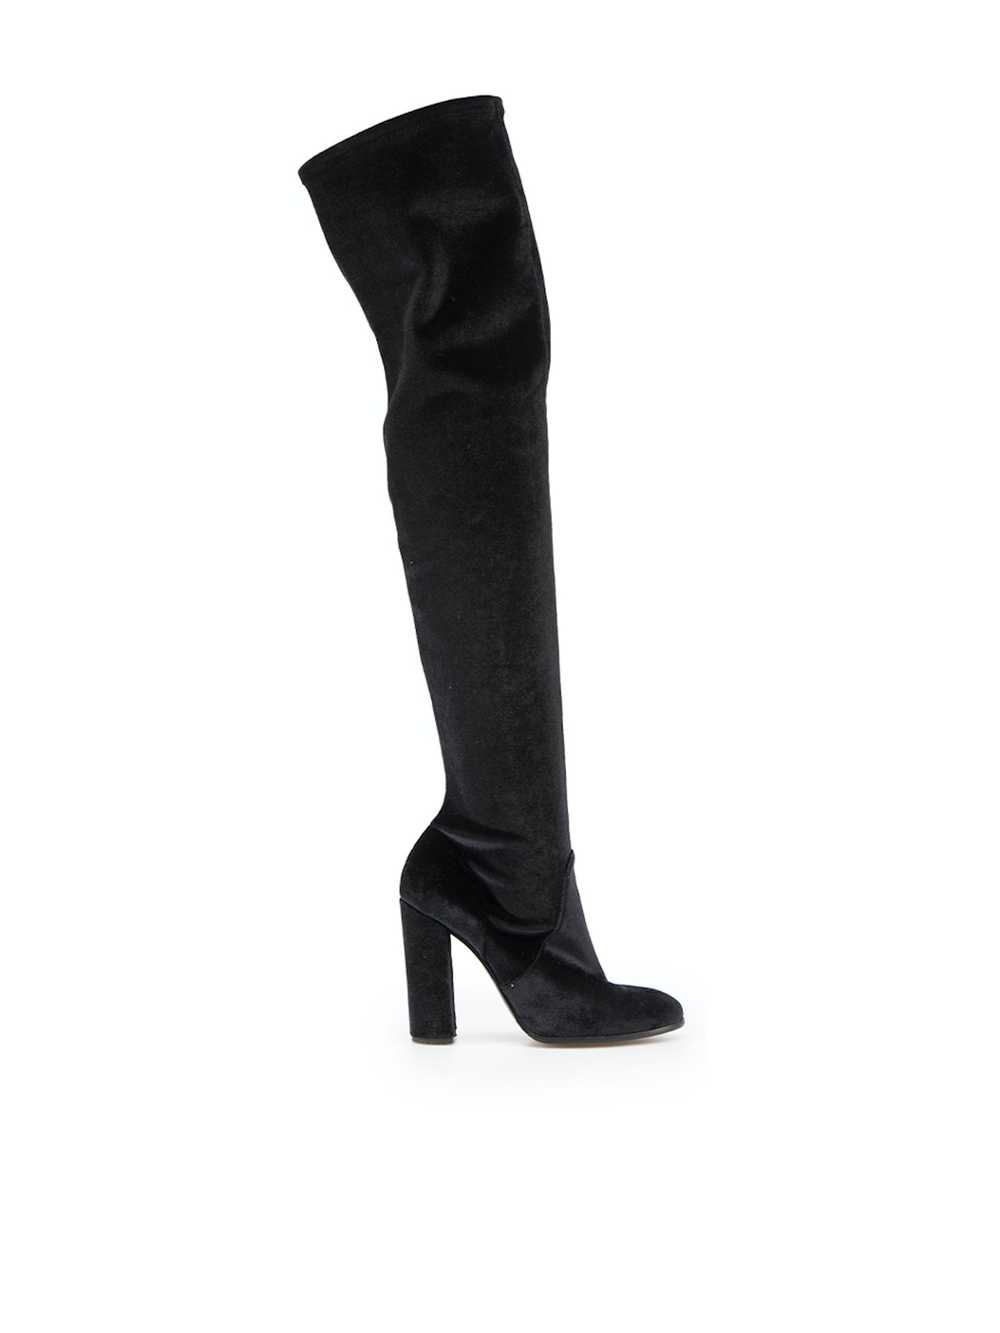 Ermanno Scervino Black Velvet Thigh High Boots - image 1